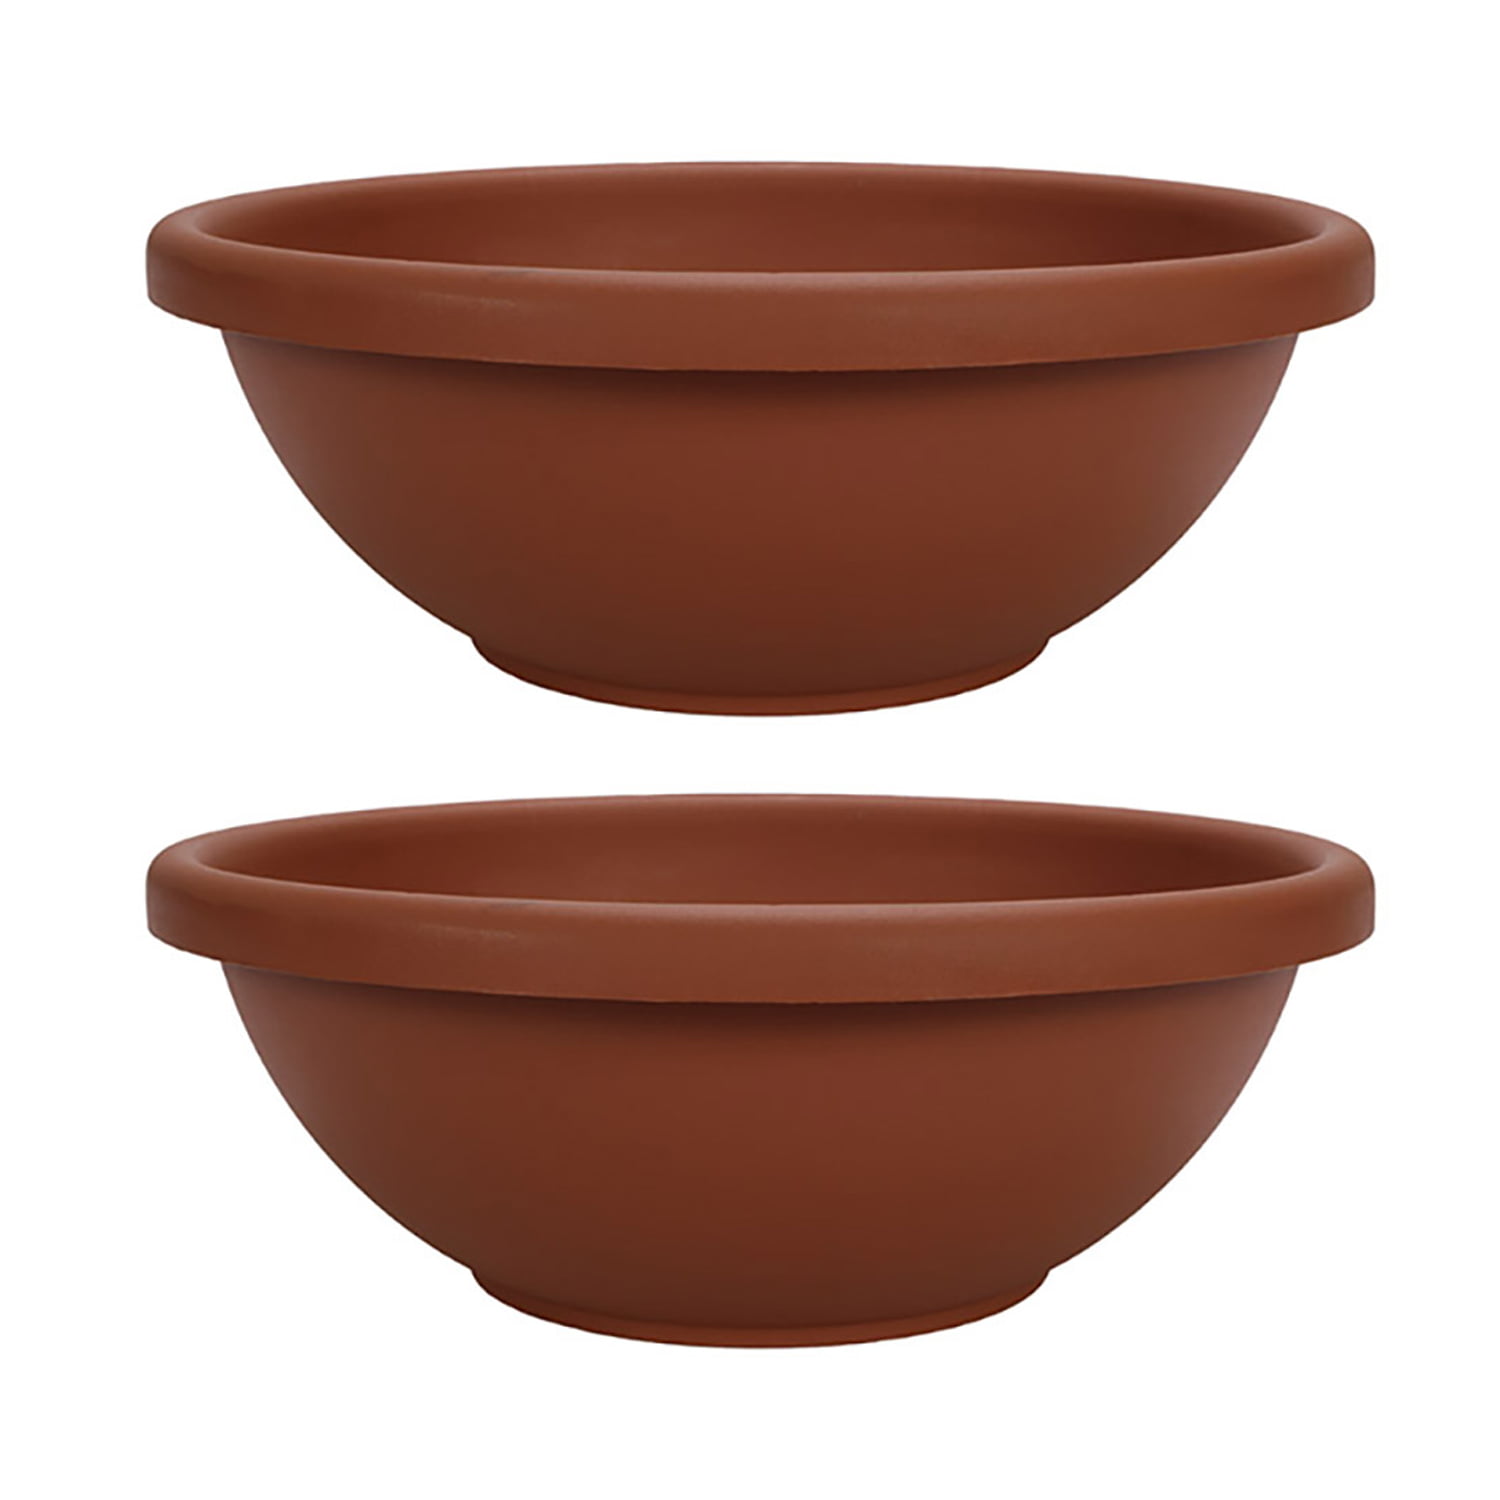 Planter Inch Bowl 12 Antique Copper Pot Indoor / Outdoor Plastic 